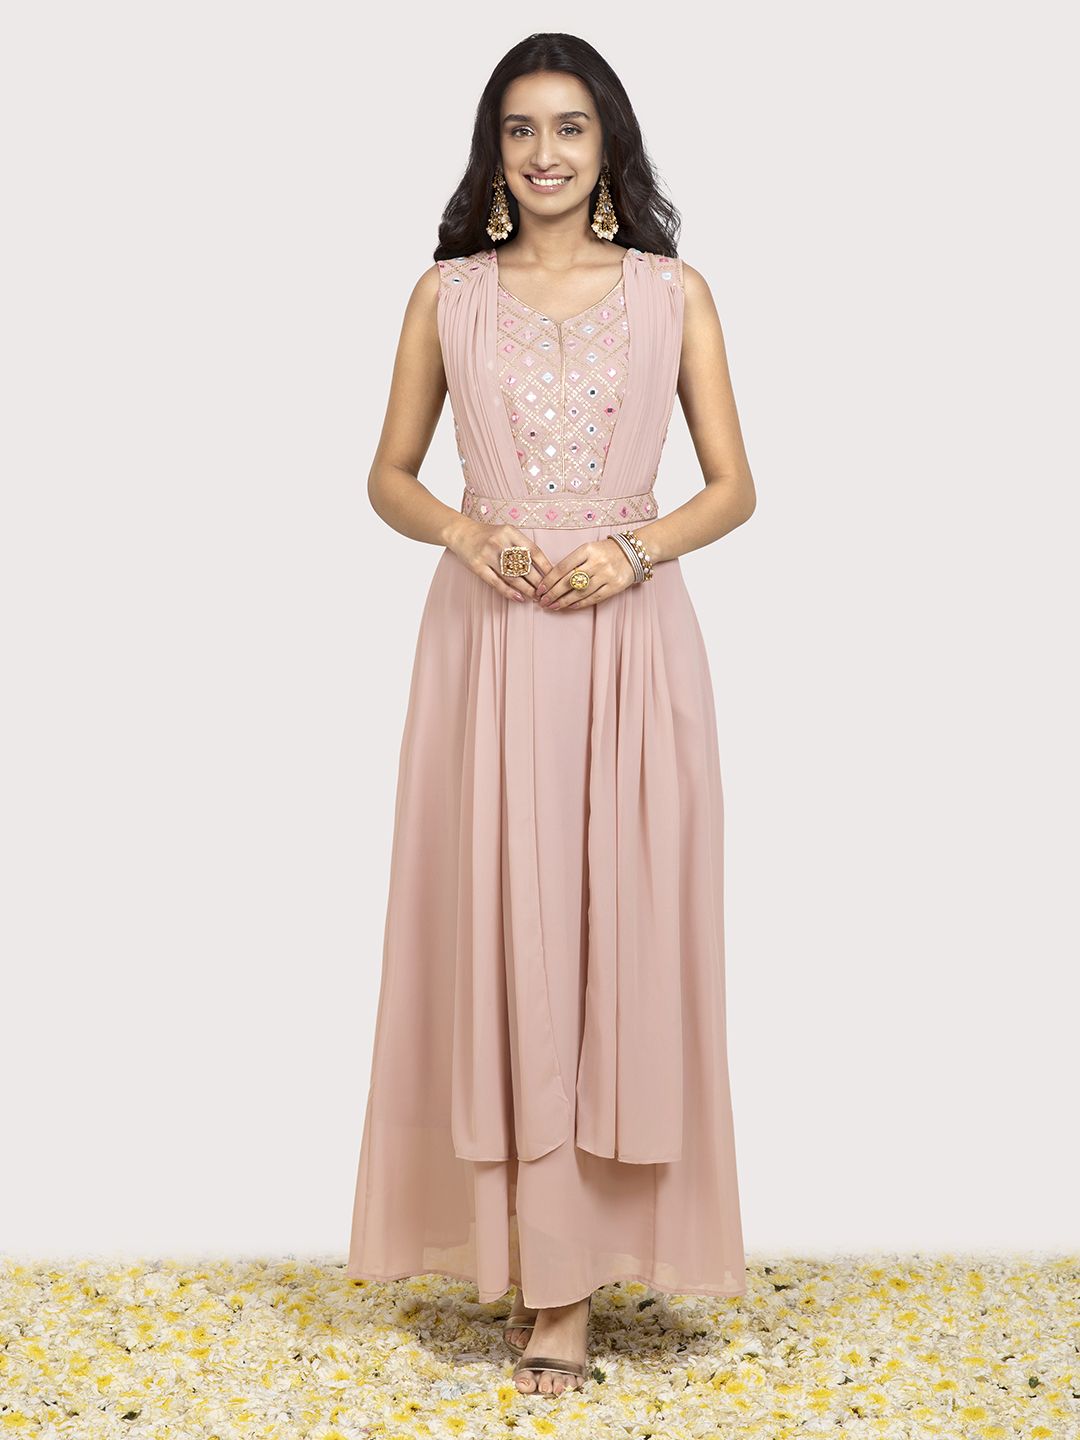 INDYA X Shraddha Kapoor Pink Blush Mirror Embroidered Front Dupatta Dress Price in India